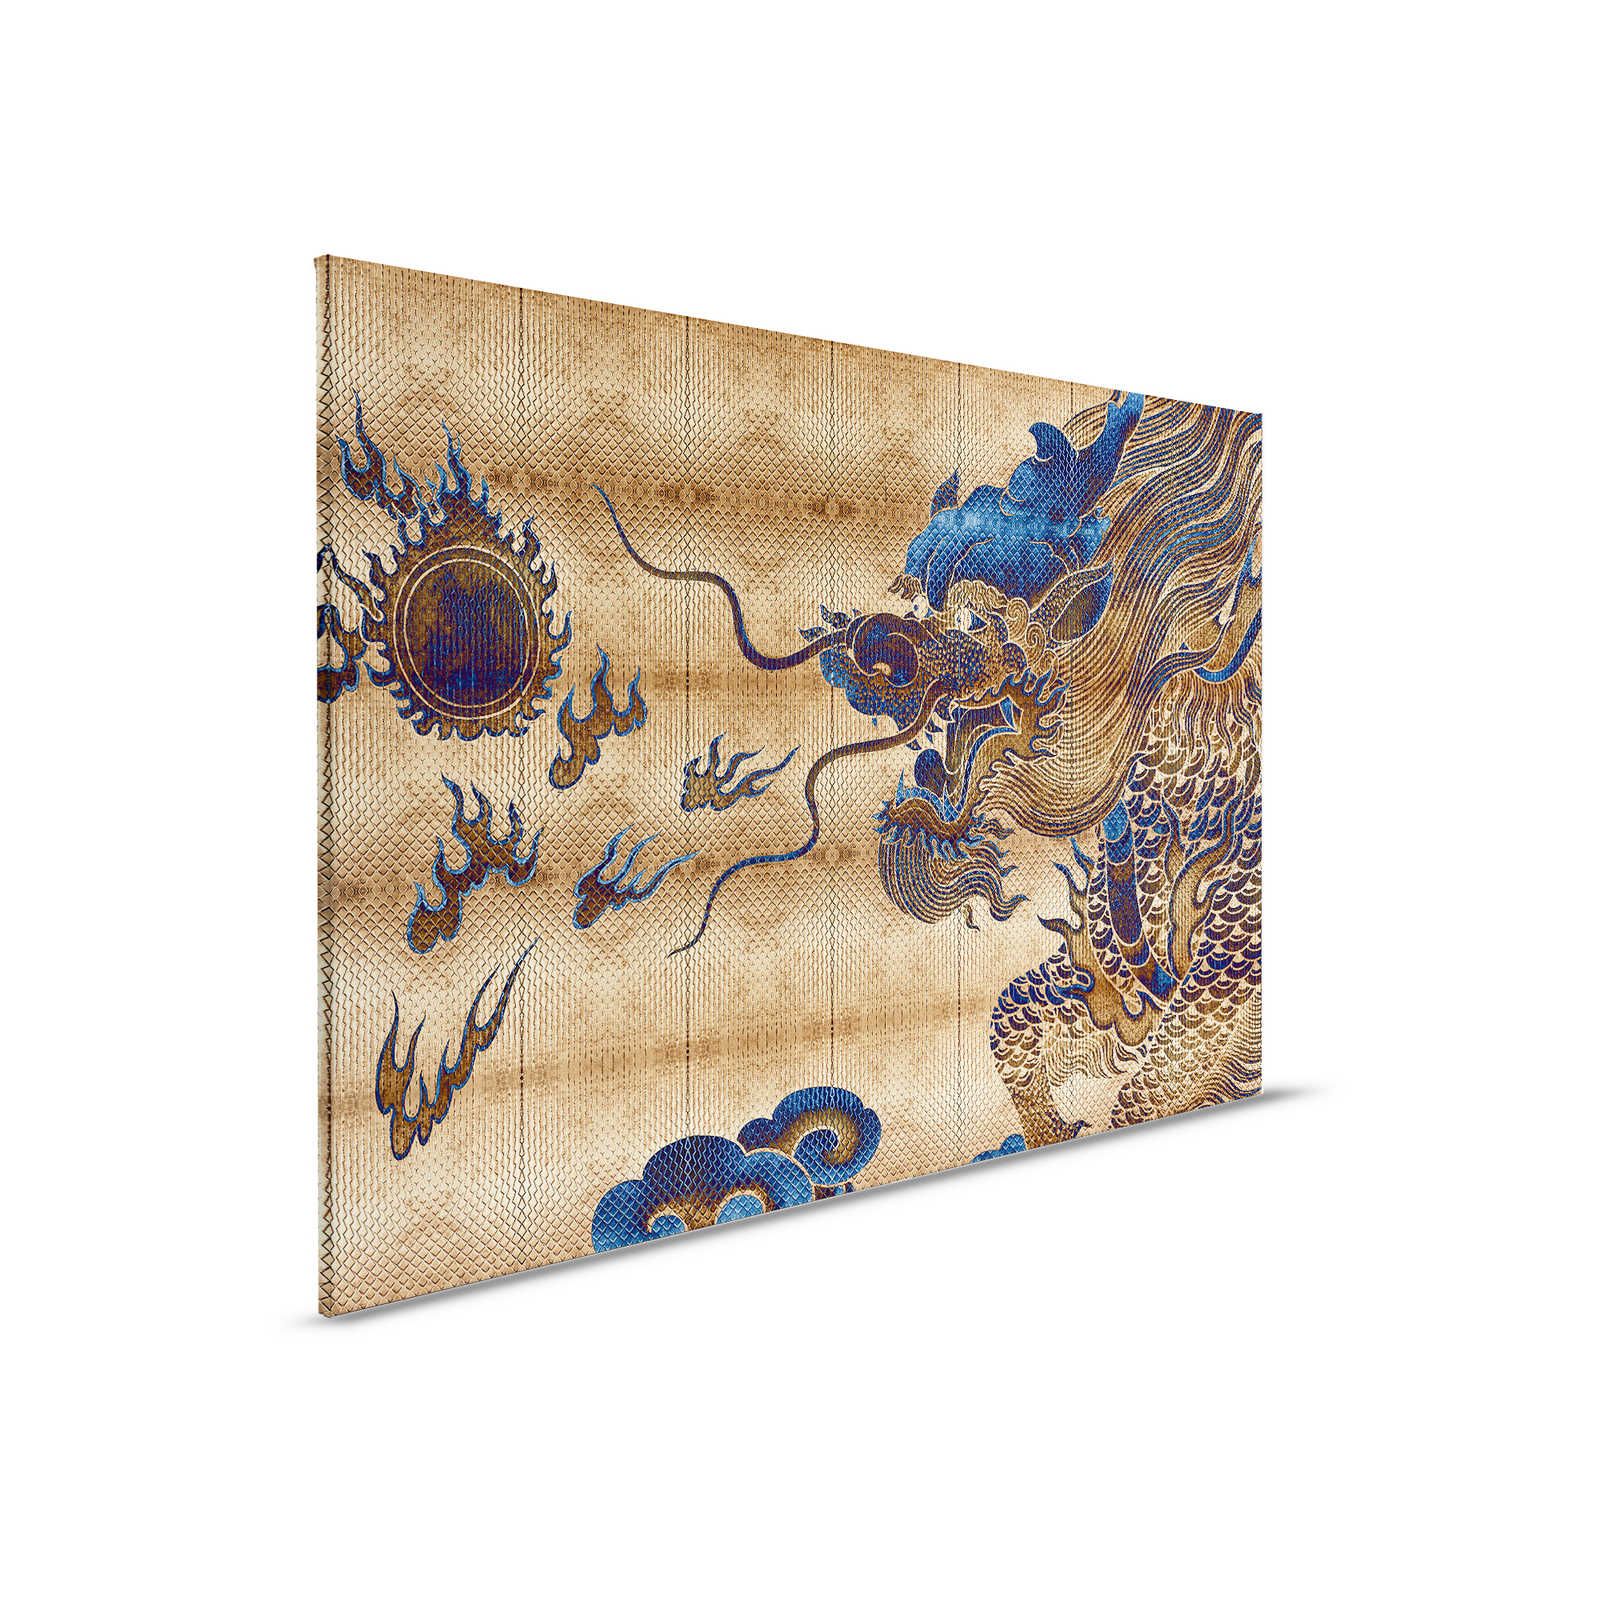 Shenzen 2 - Canvas schilderij Gouden Draak in Aziatische stijl - 0,90 m x 0,60 m
